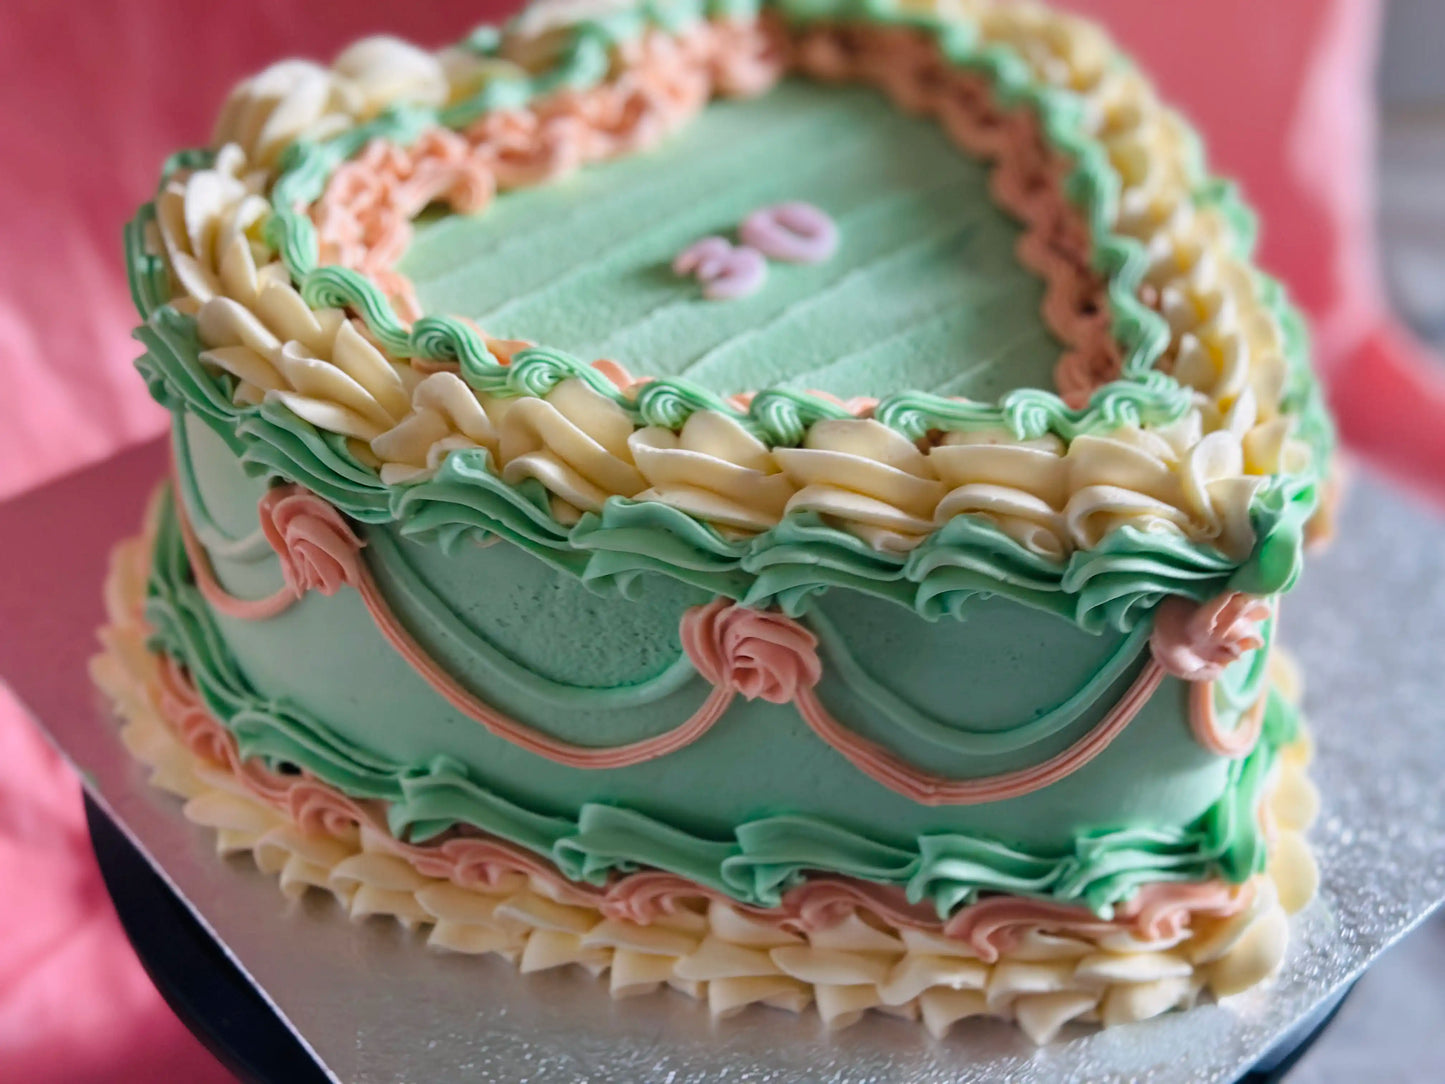 Vintage heart cake with nostalgic buttercream roses, freshly baked for you by CakeTrays.co.uk